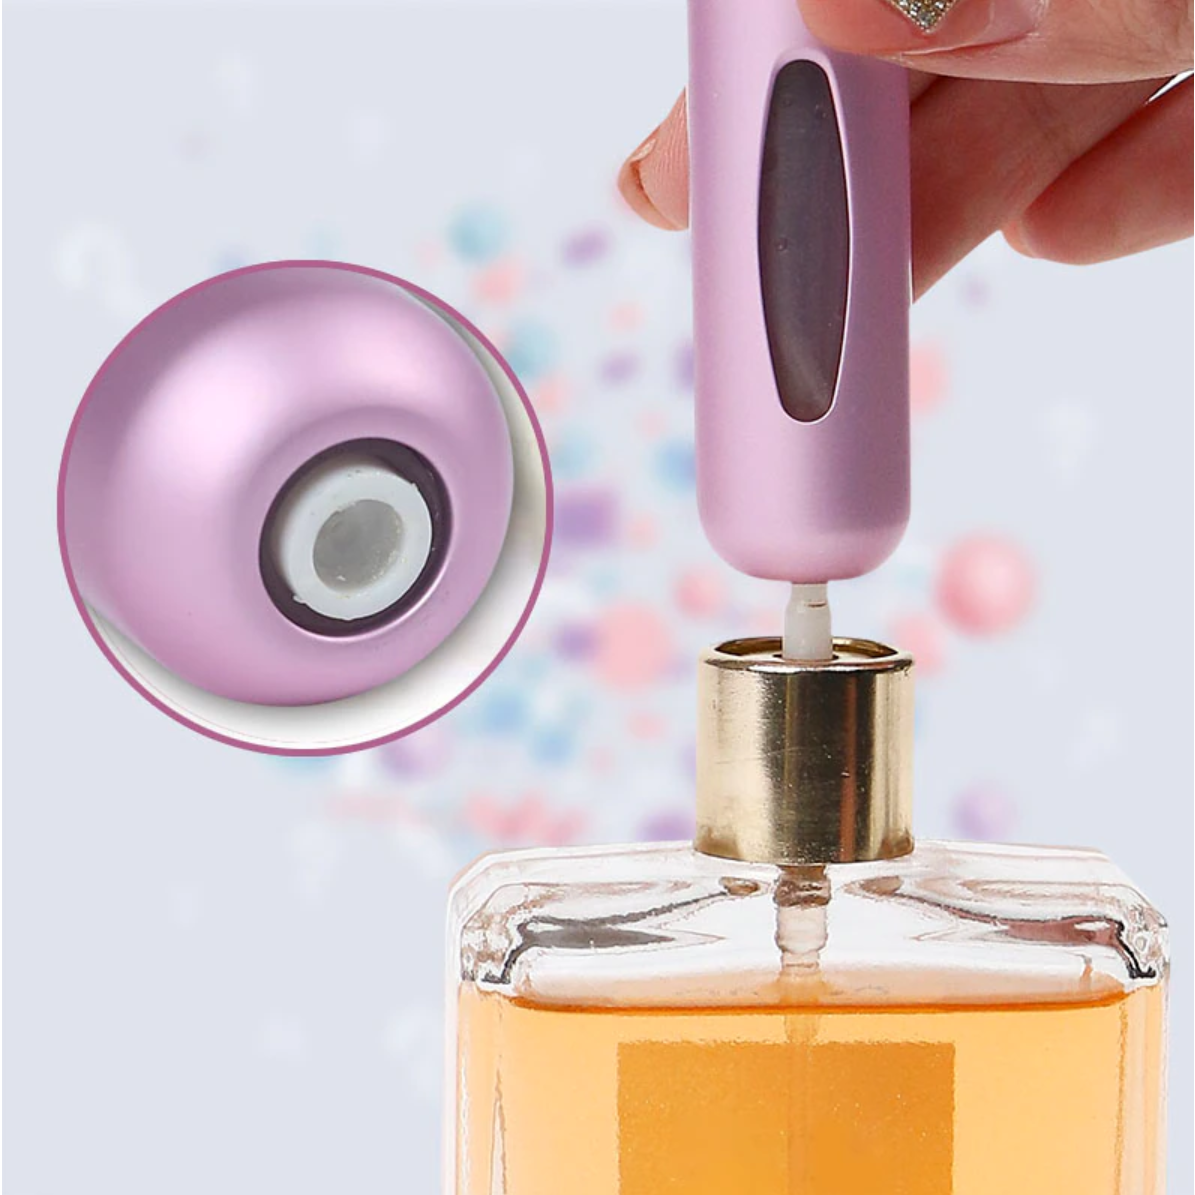 Refillable Mini Perfume Bottle (Buy 1 Get 1 Free)